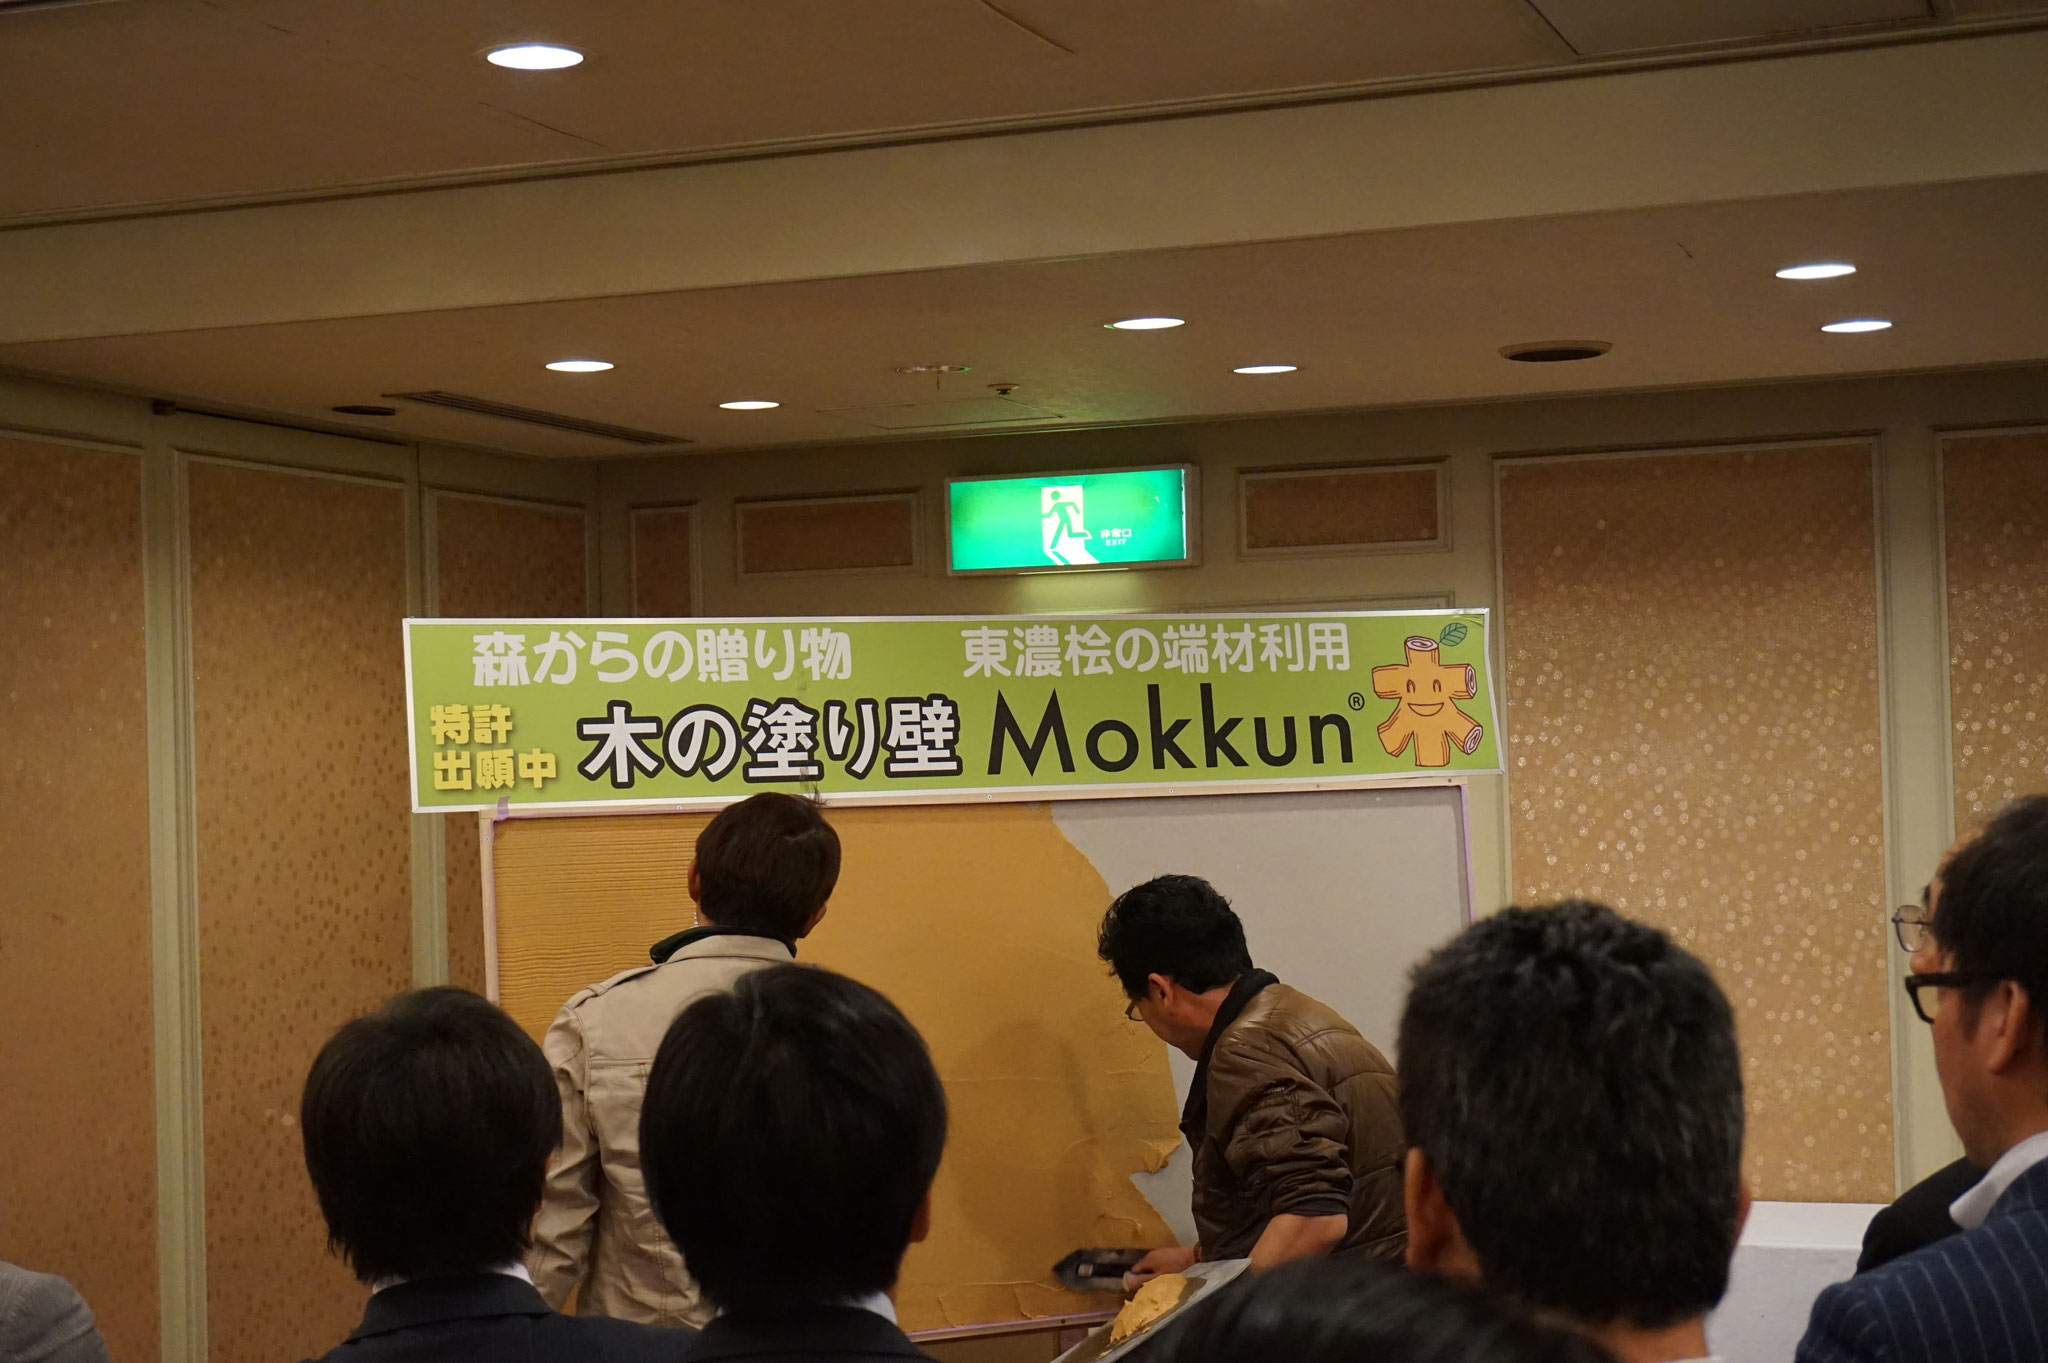 Mokkunシンポジウム2018 開催します